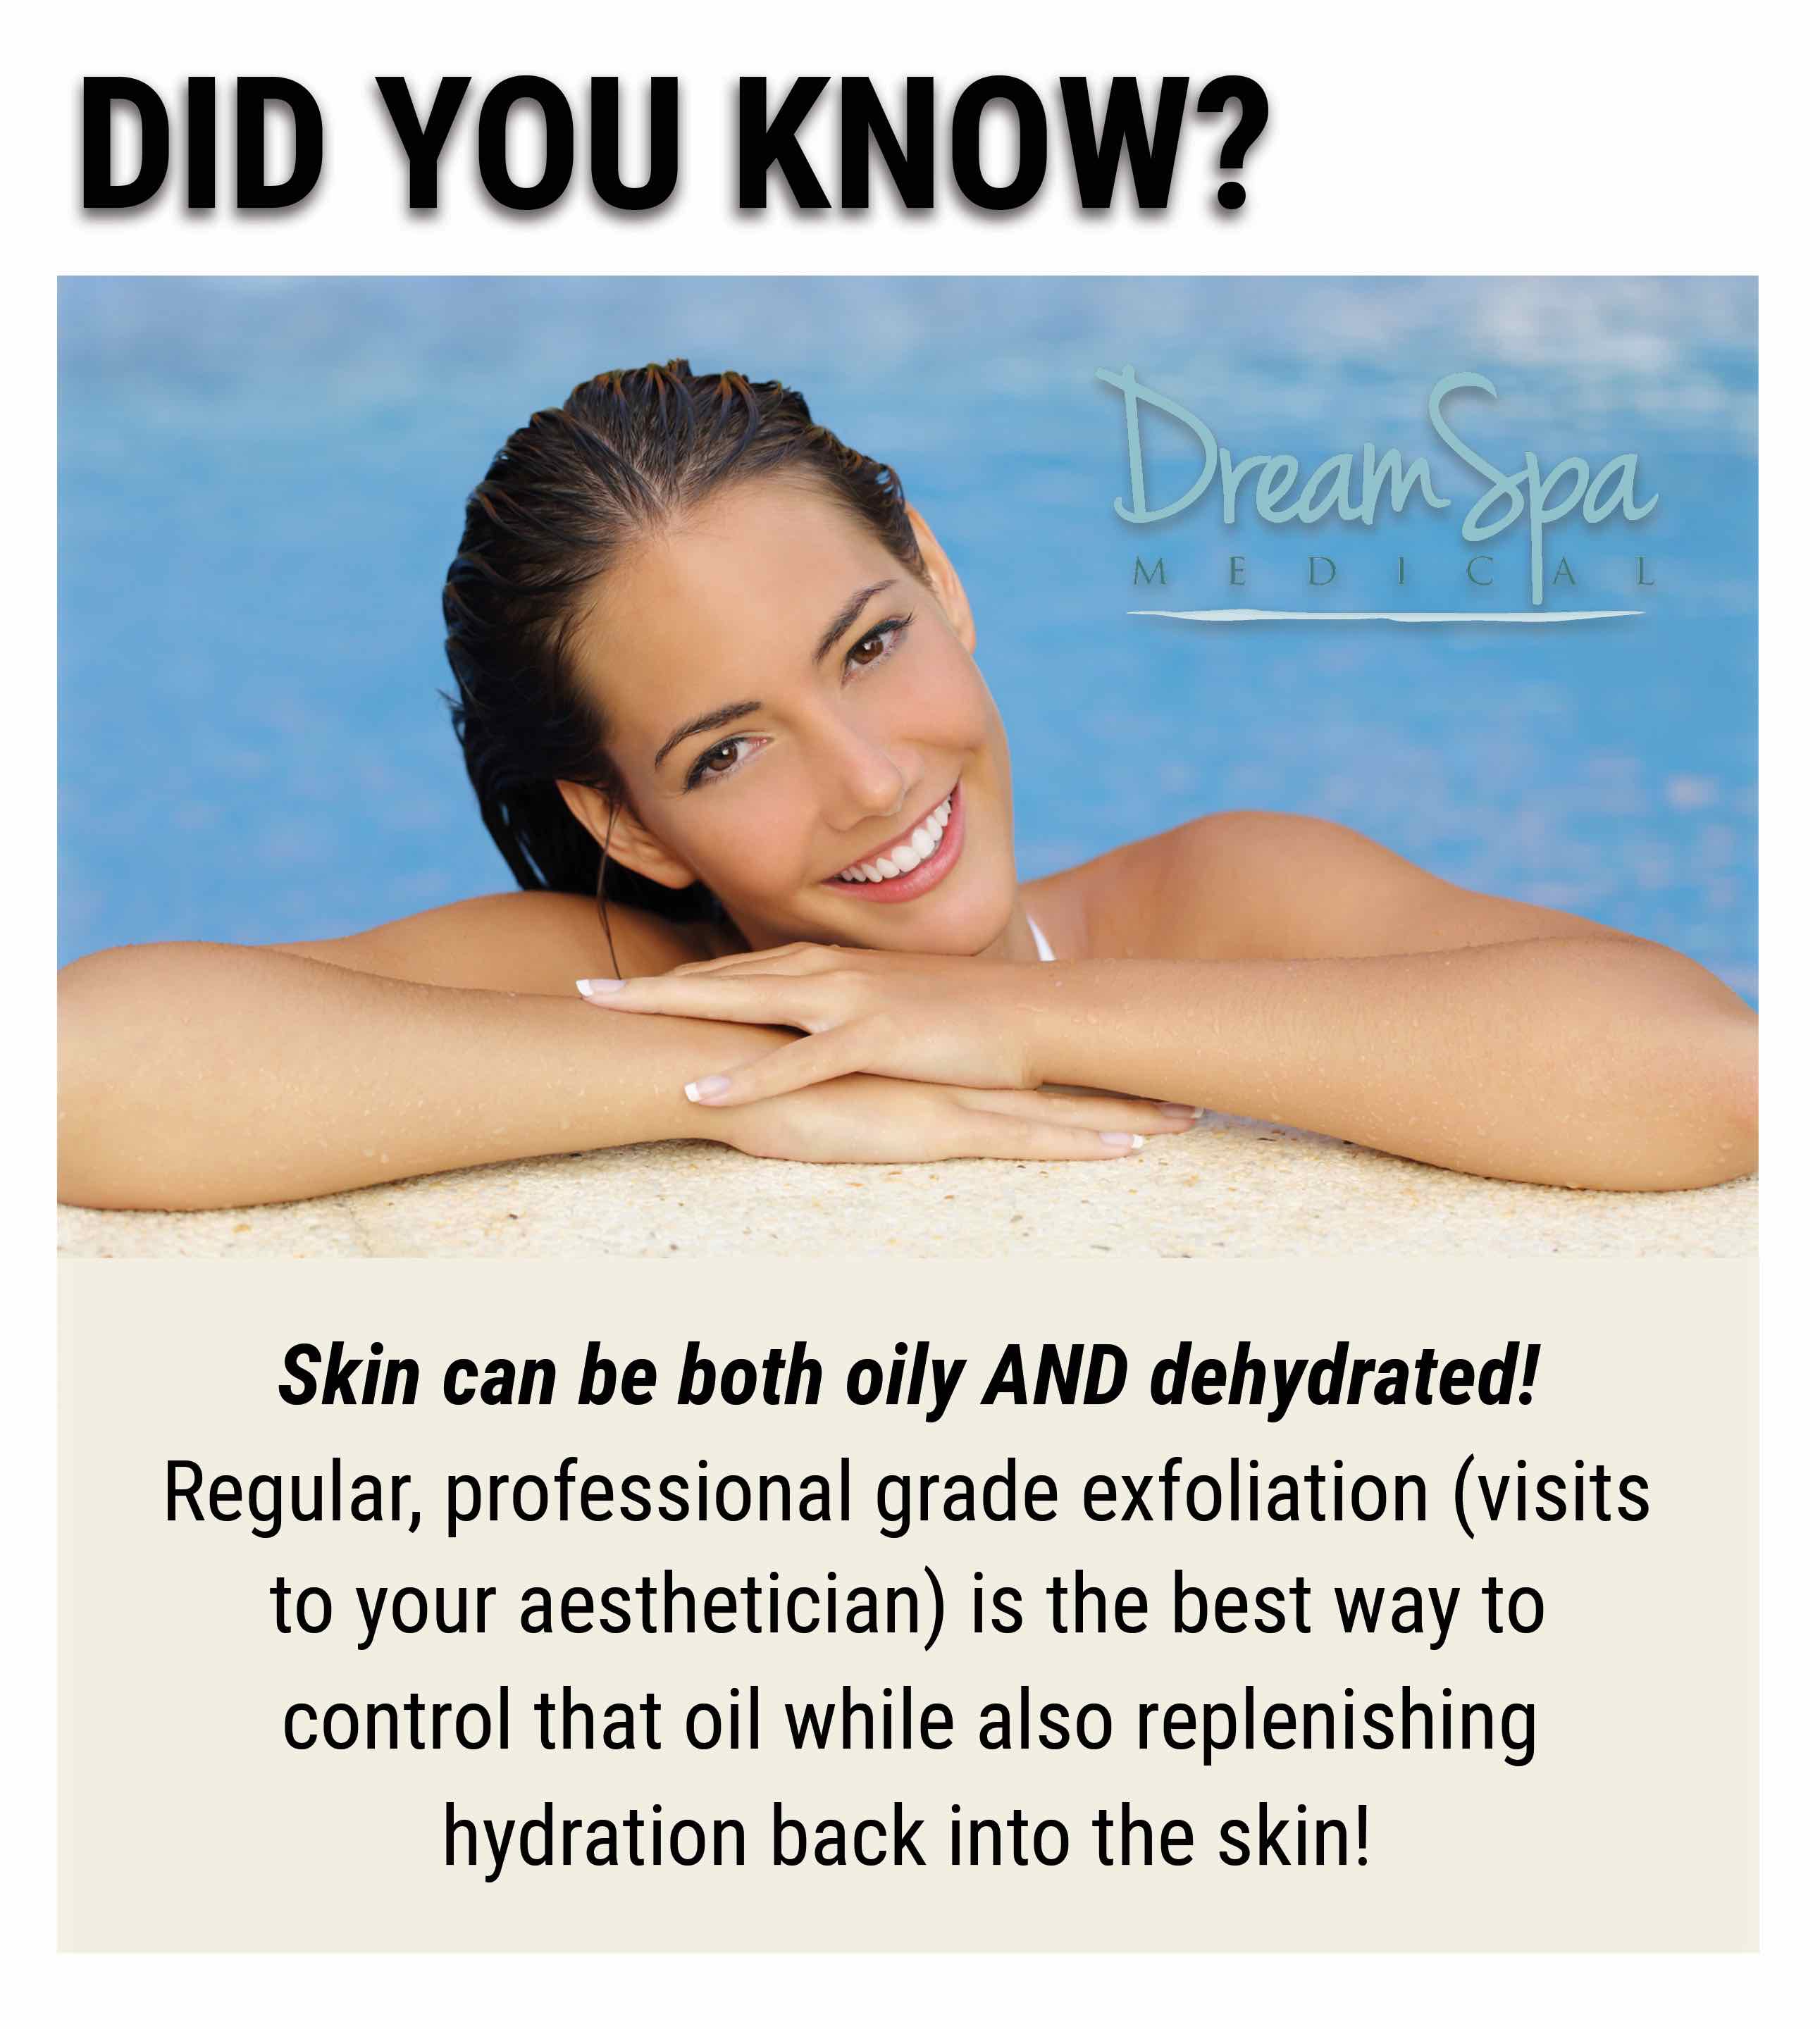 Dream Spa Medical Blog | Professional Grade Exfoliation Controls Oil in the Skin